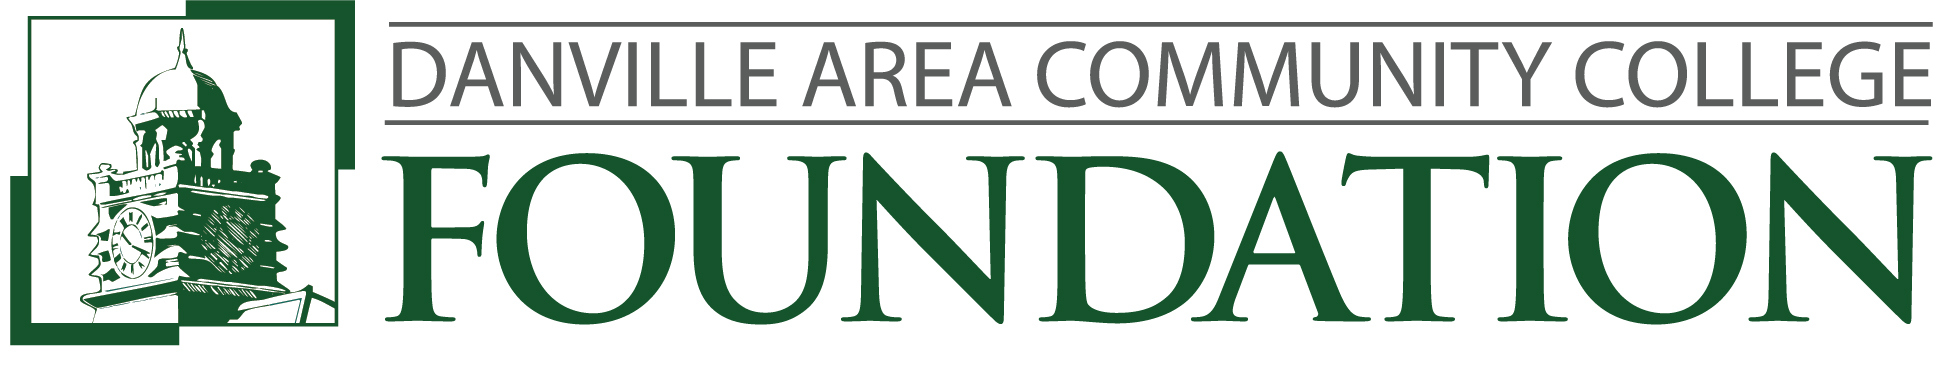 Danville Area Community College Foundation logo horizontal